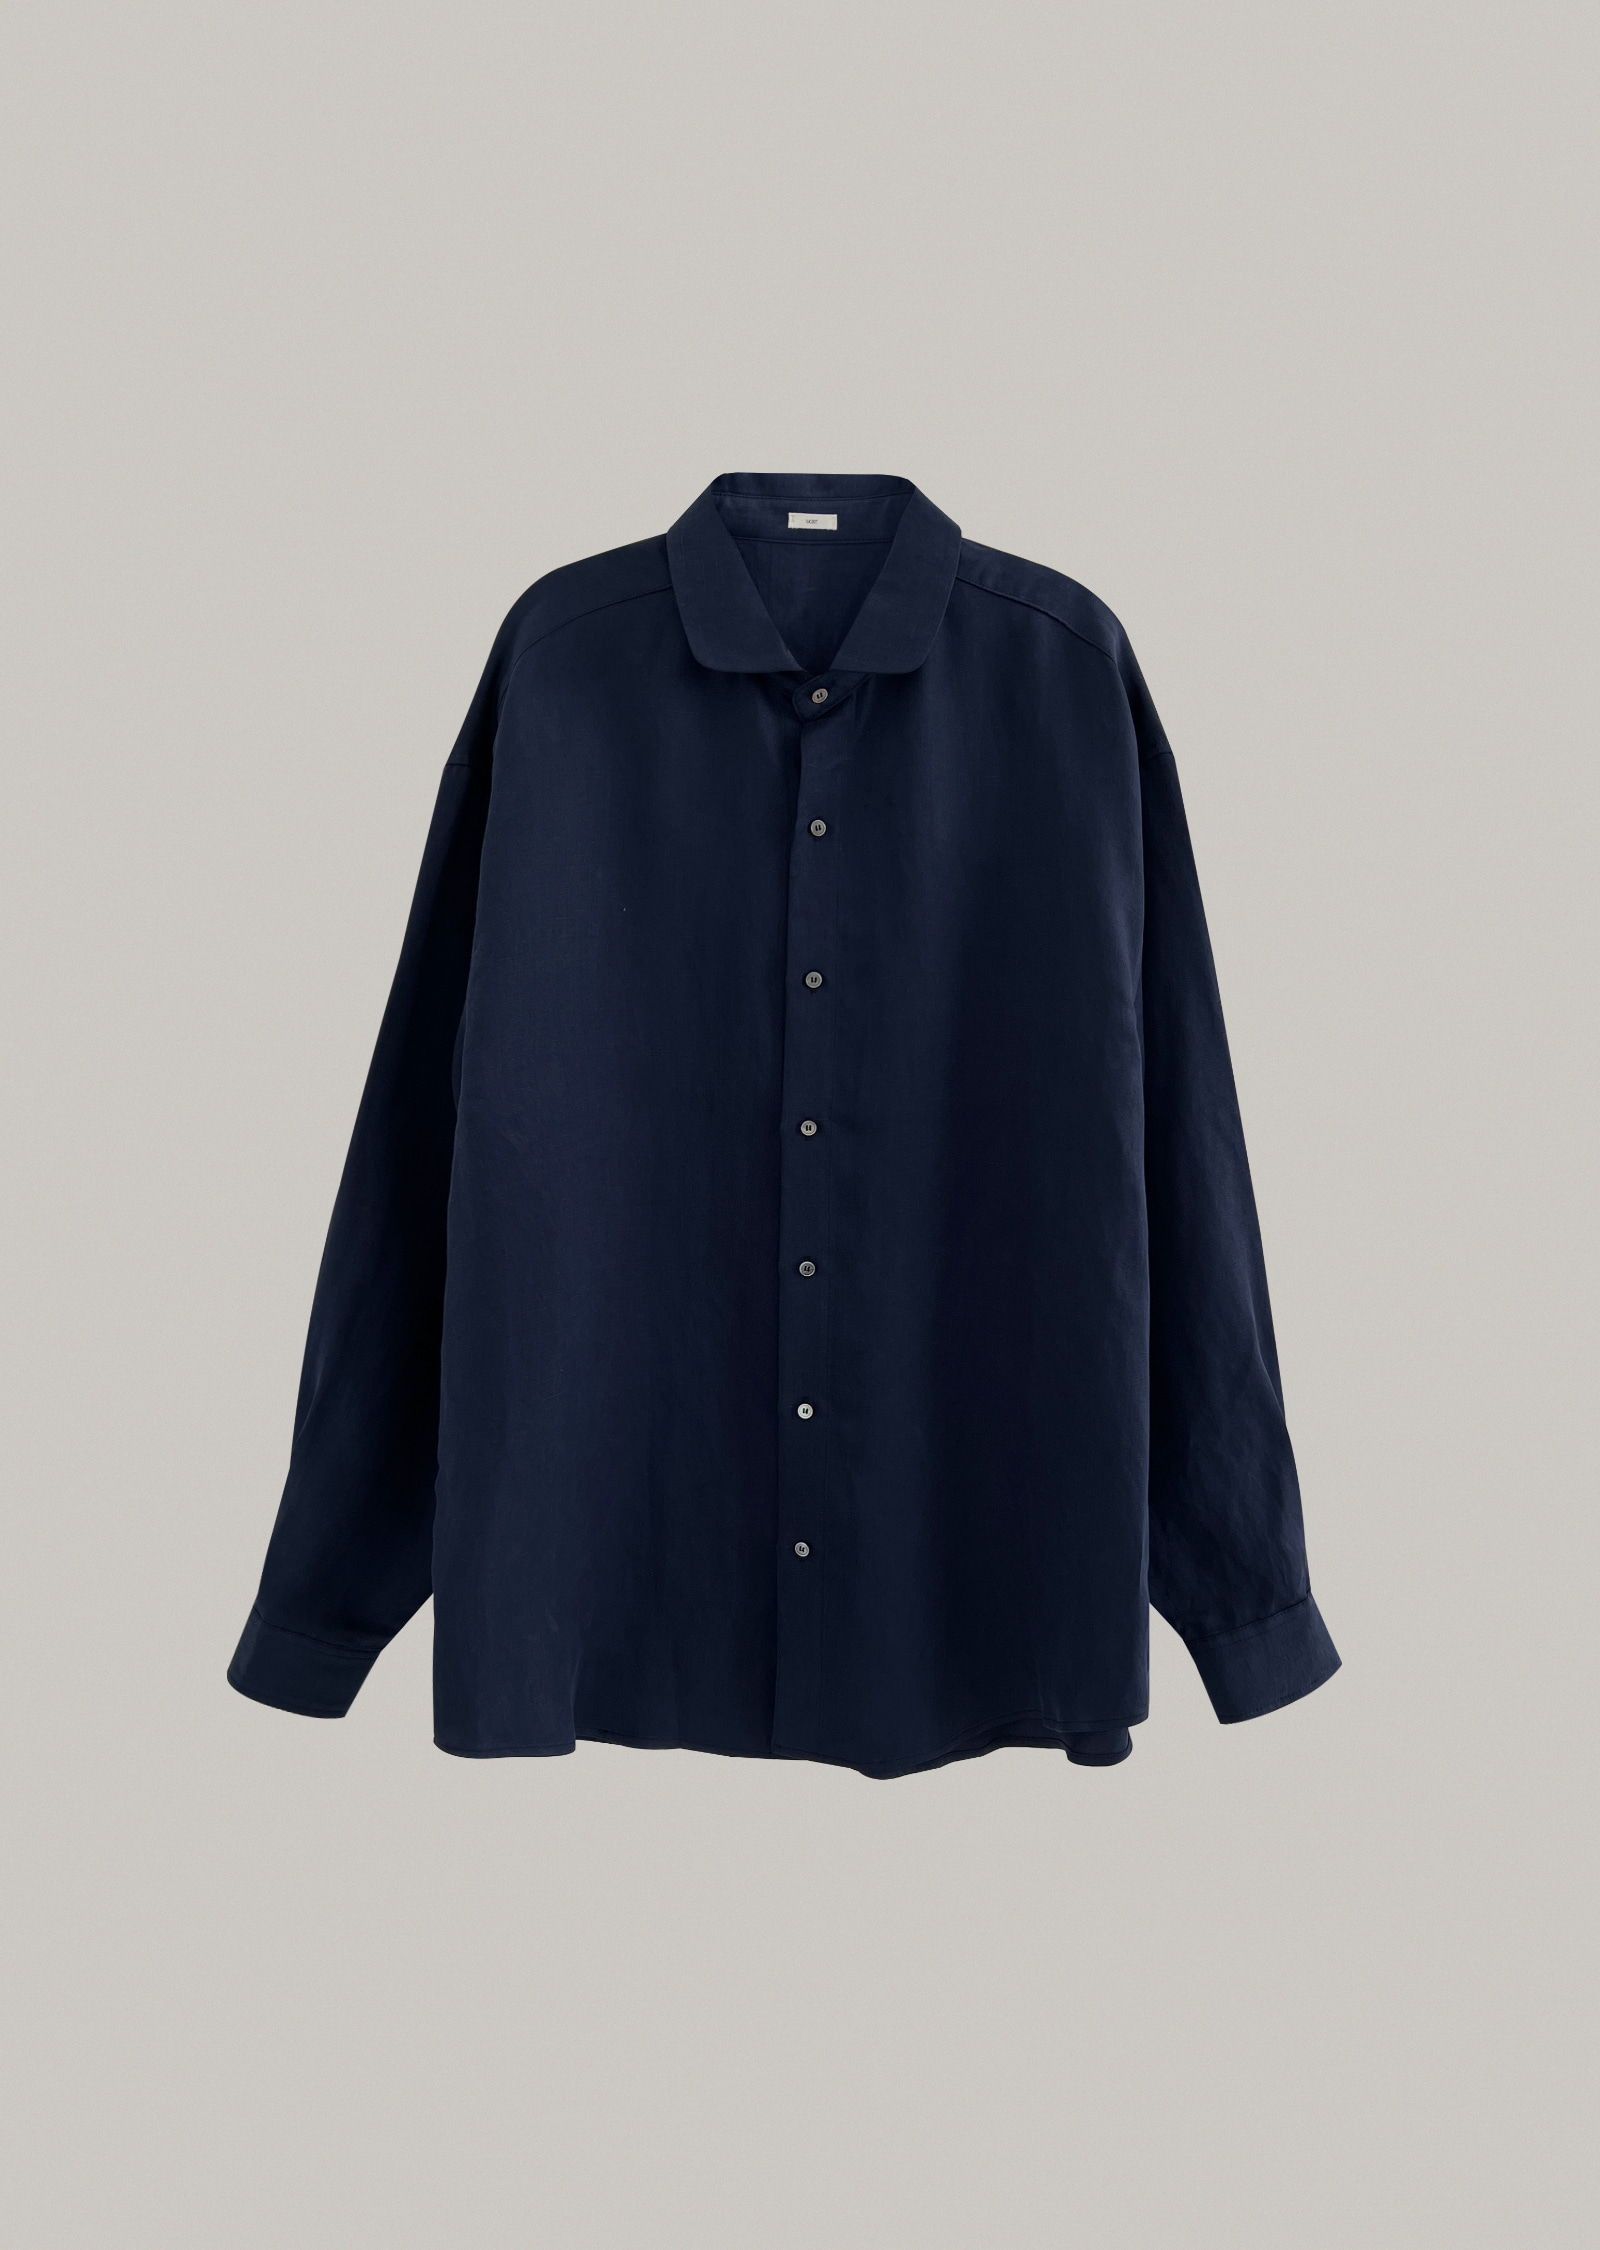 round collar linen shirt (navy)